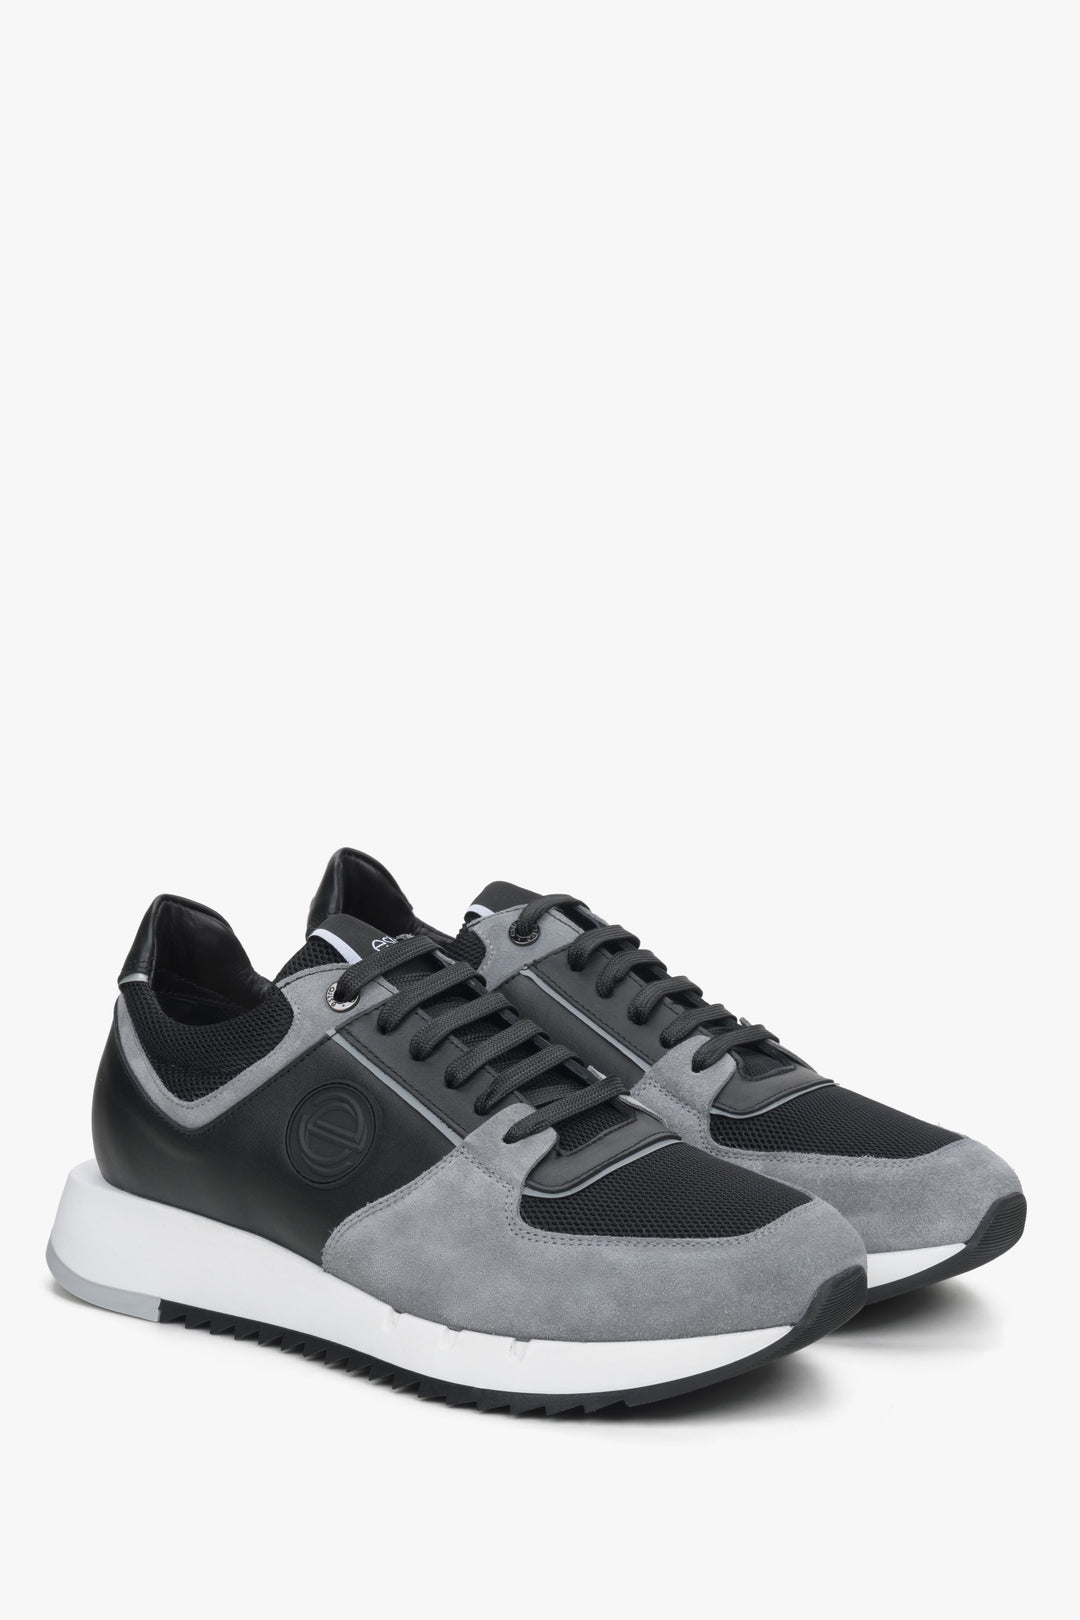 Men's black and grey velour sneakers by Estro.